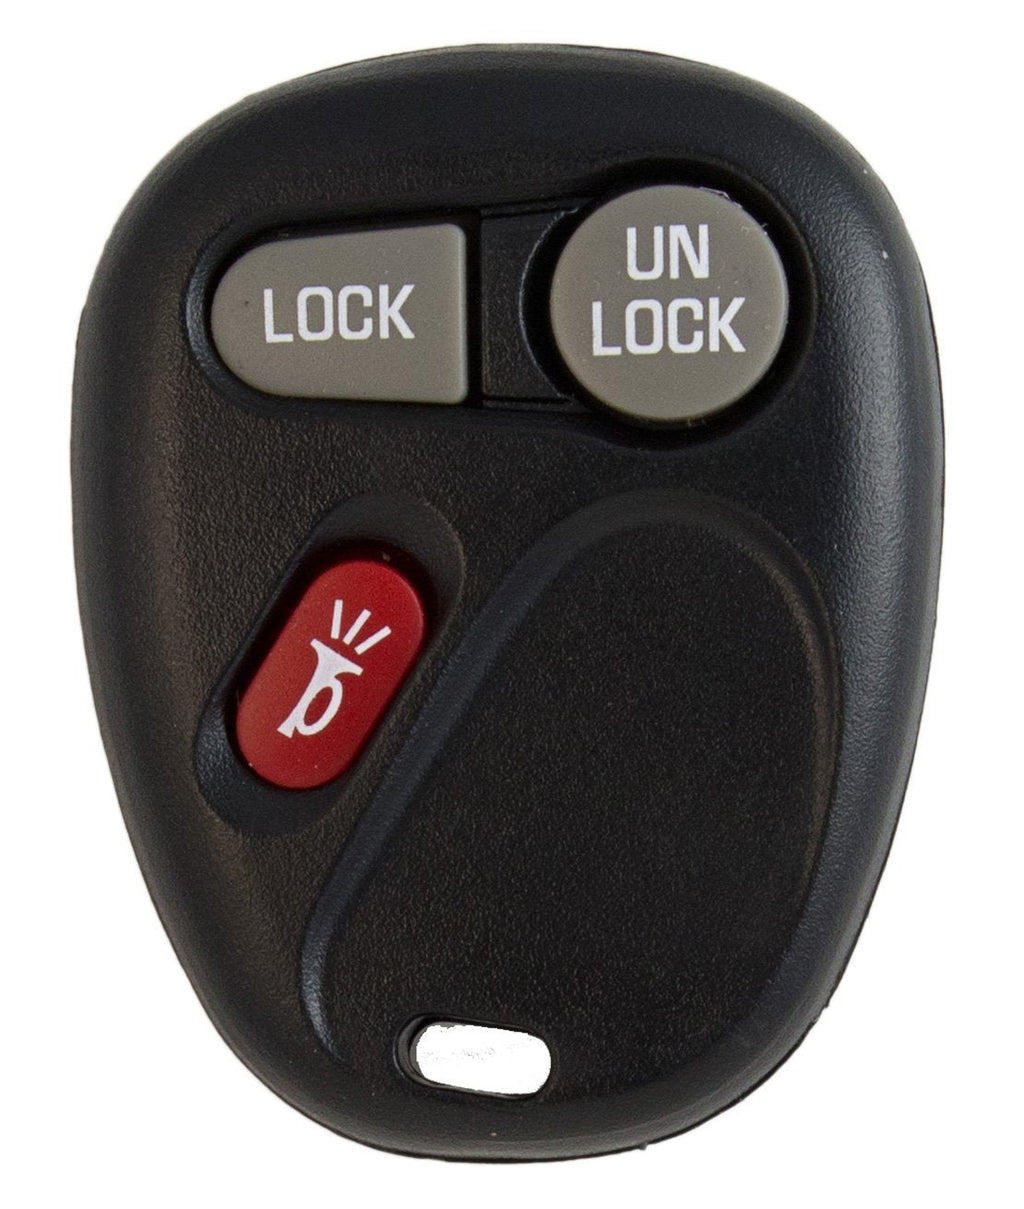  [AUSTRALIA] - Replacement Key Fob Remote for 2001-2002 Chevrolet Silverado 1500/2500/3500